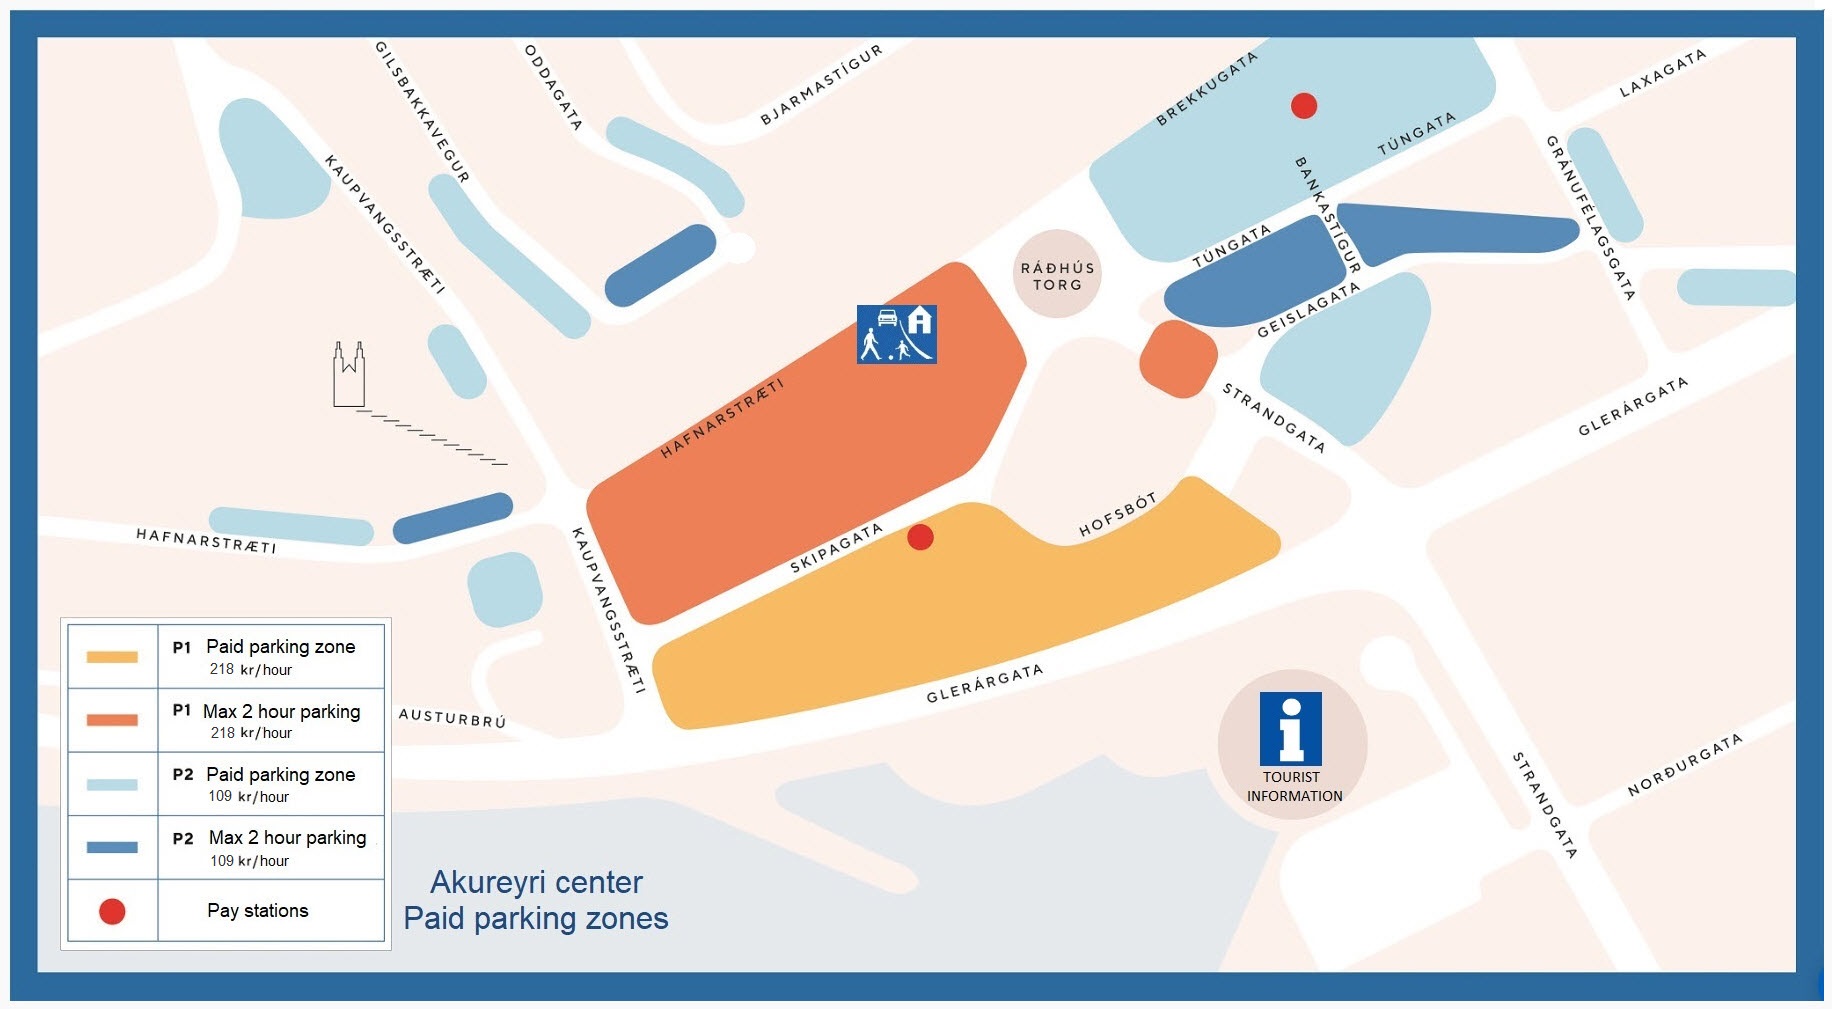 Image showing parking zones in central Akureyri 